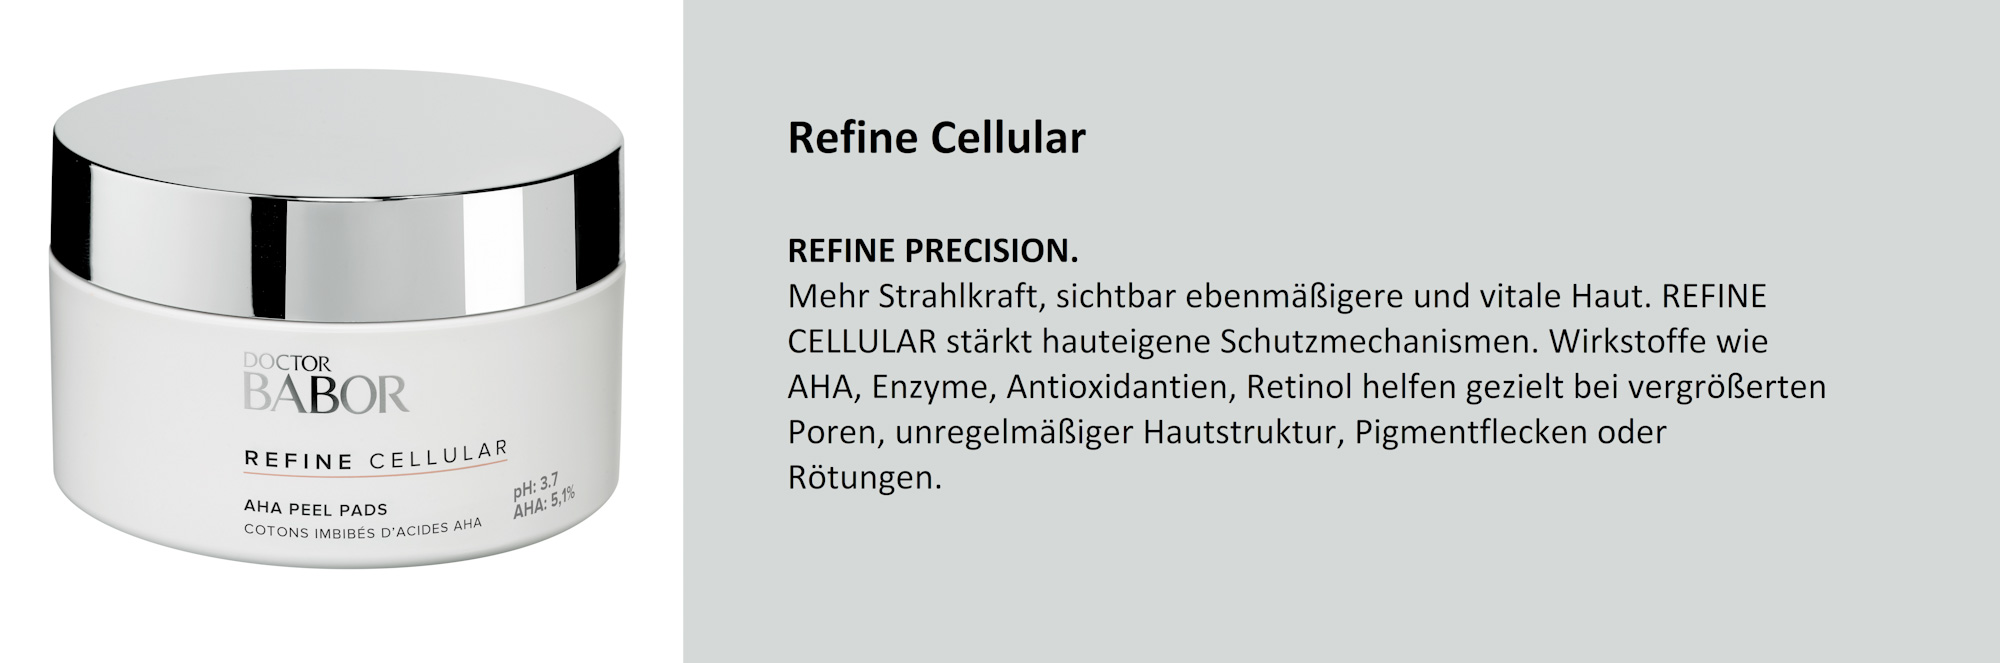 Refine Cellular